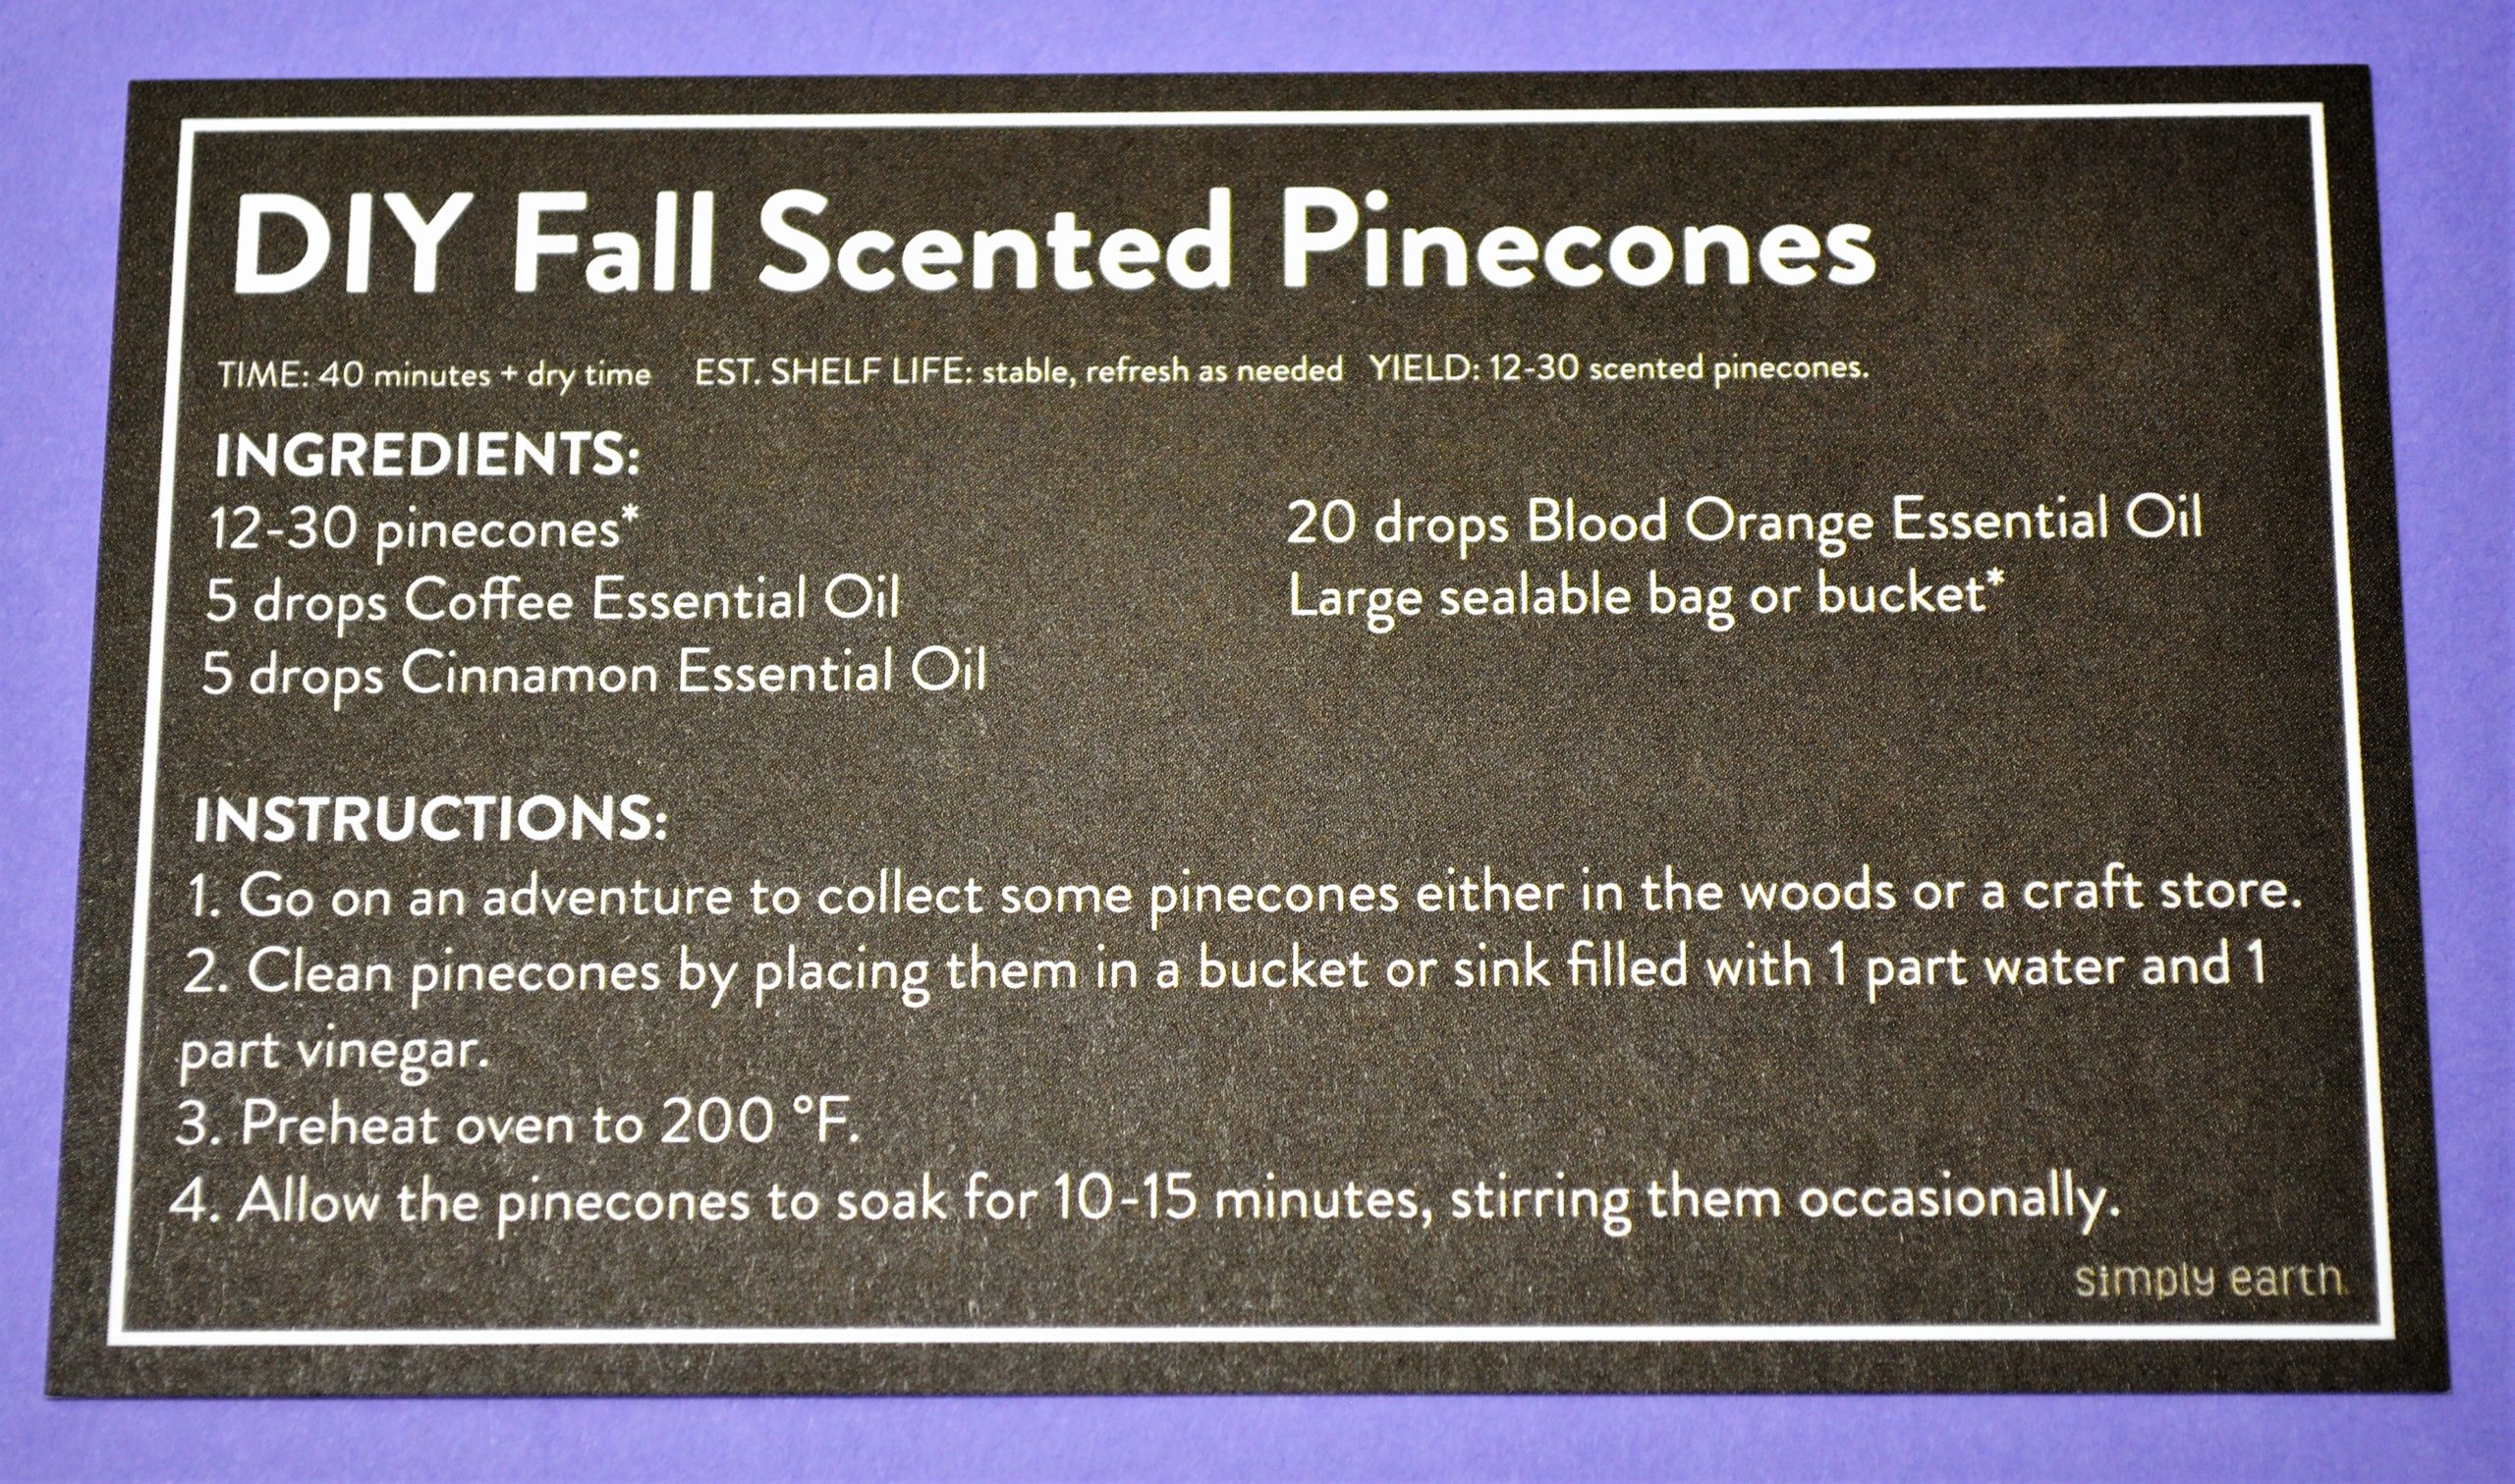 DIY Fall Scented Pinecones Recipe Card